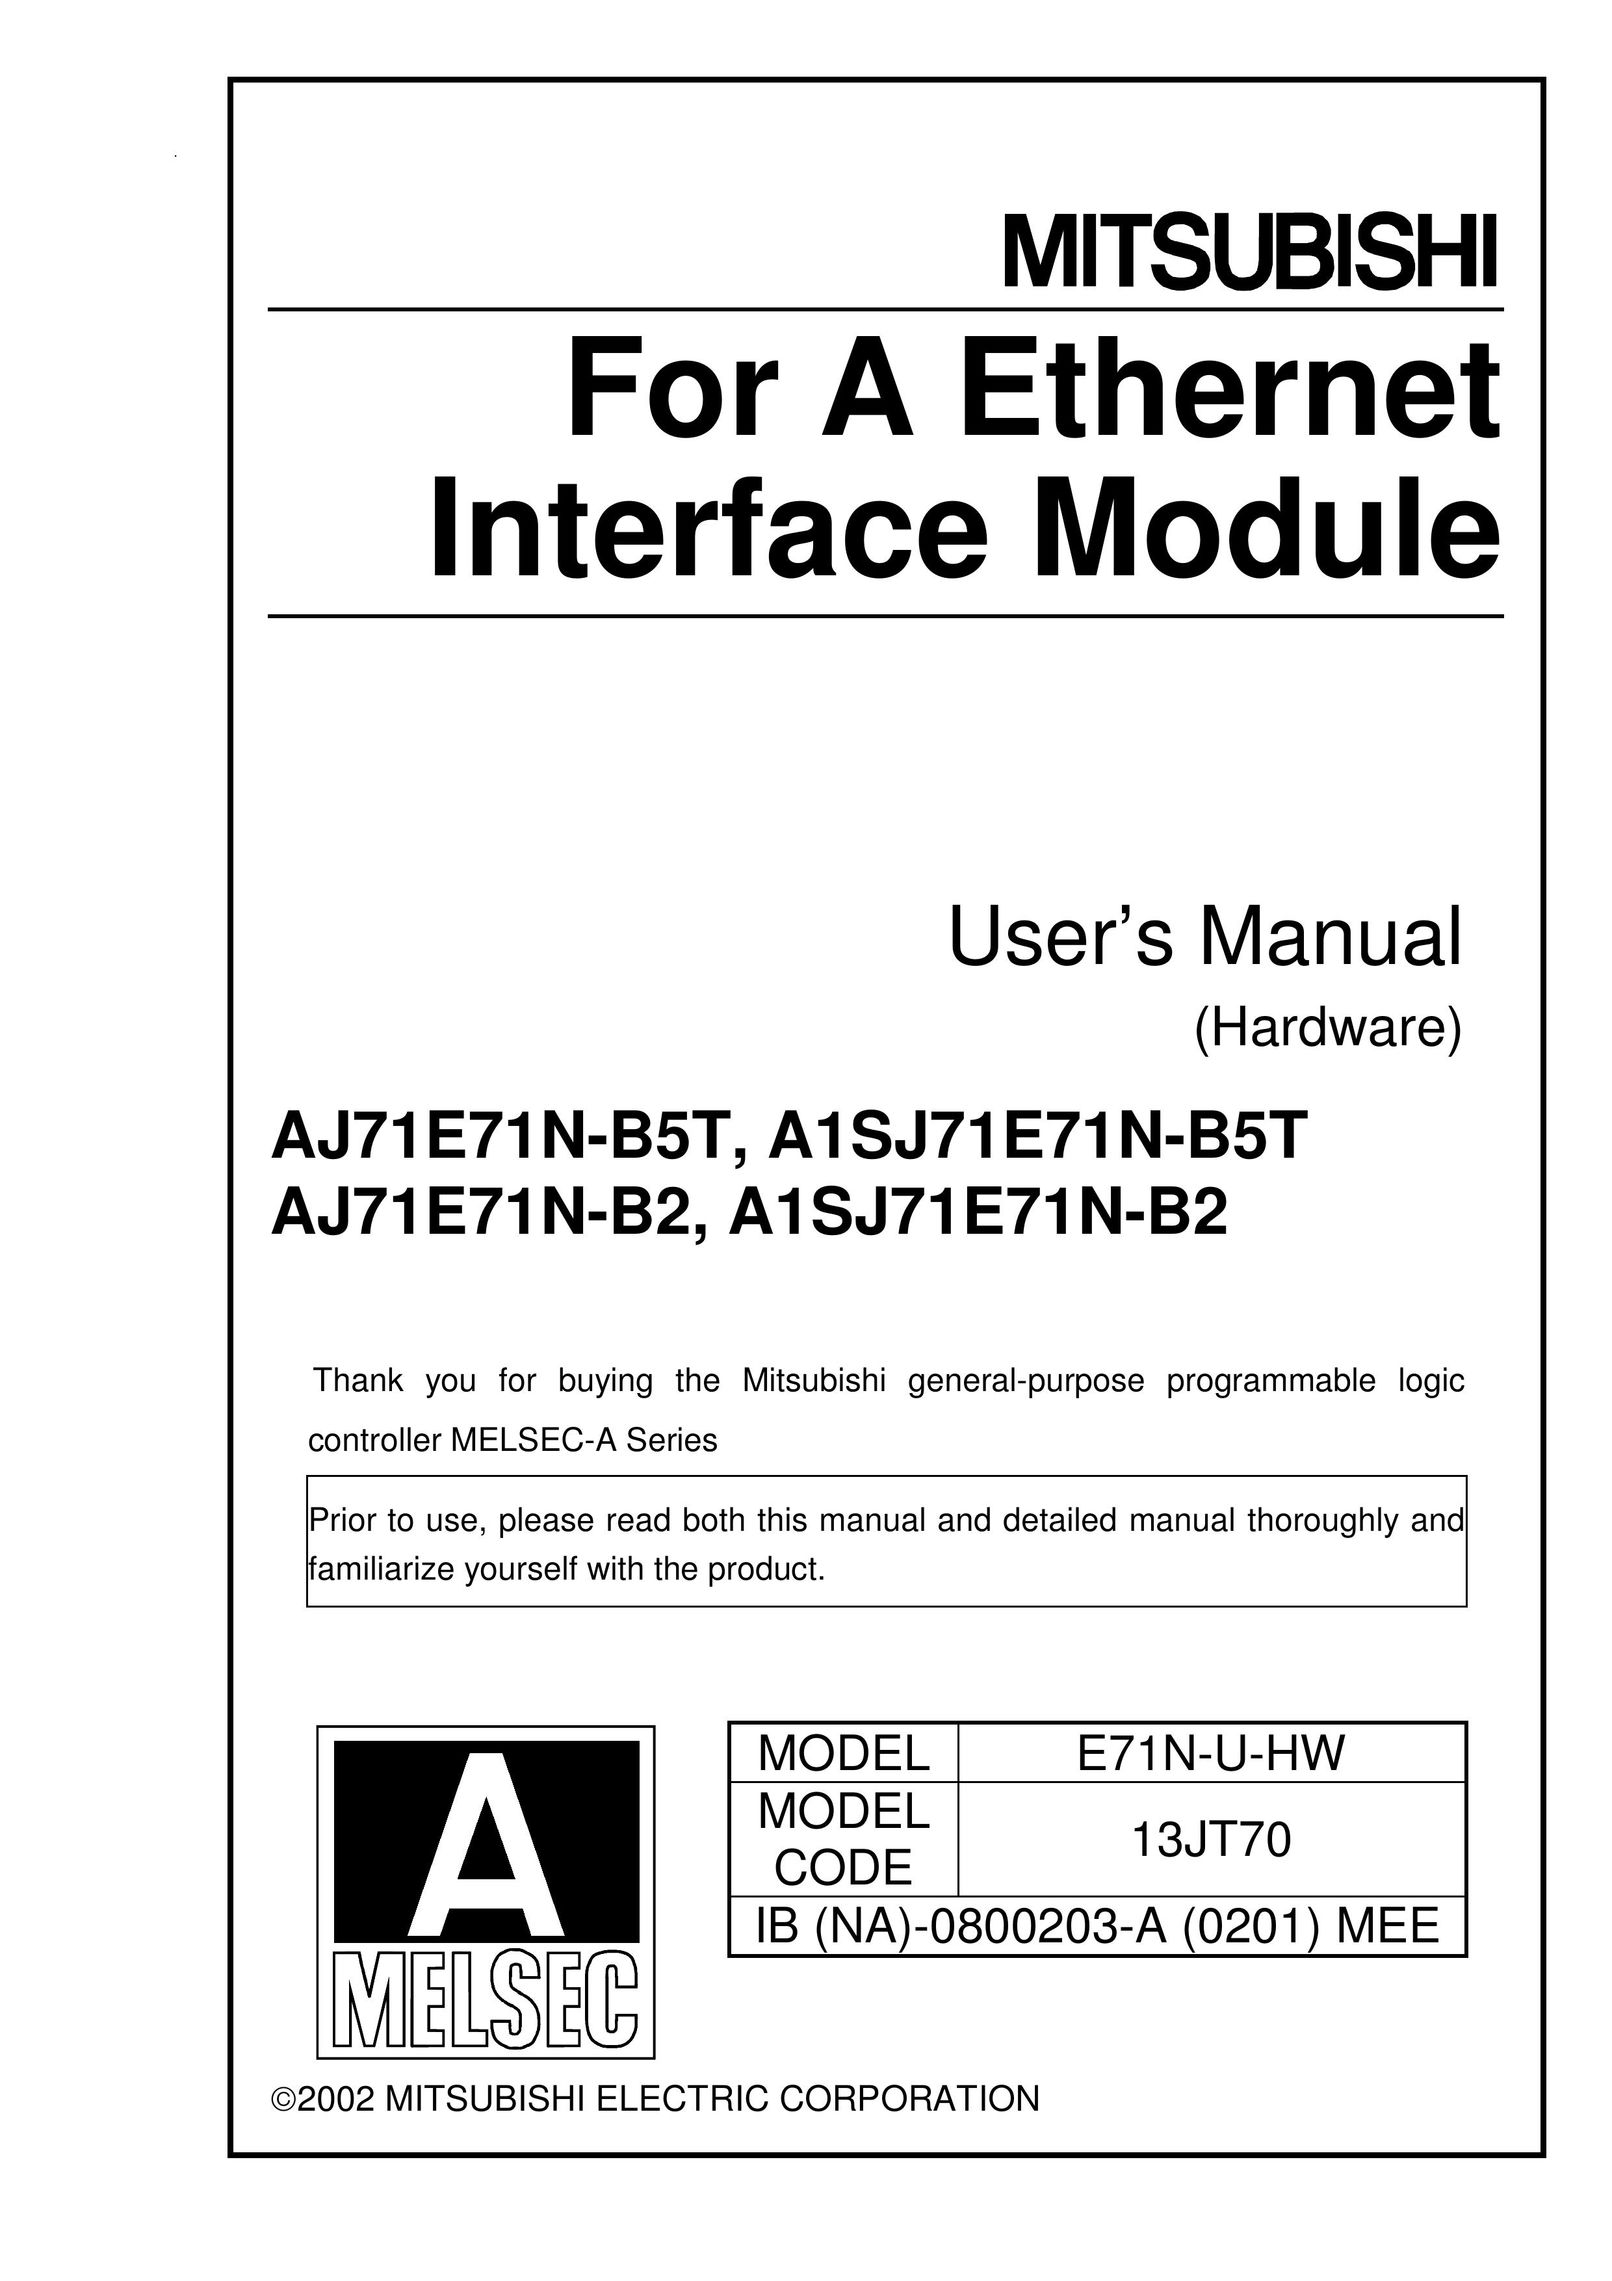 Mitsubishi AJ71E71N-B5T Network Card User Manual